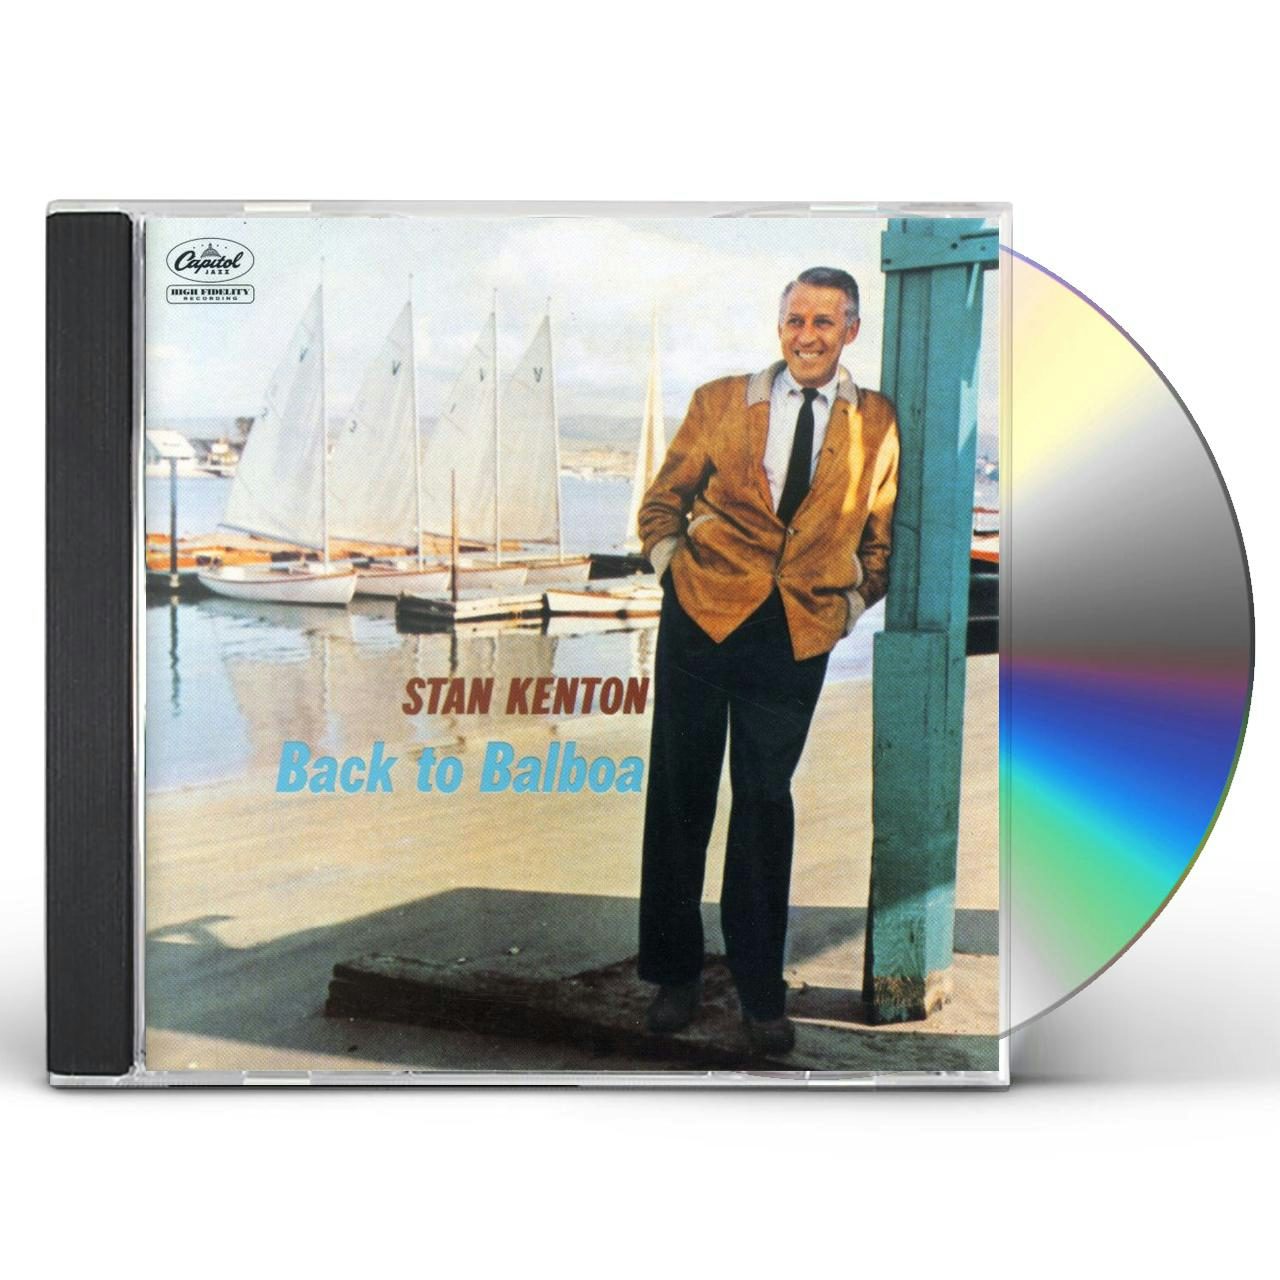 CD Album capitol jazz 7243 5 96591 2 1 Stan kenton/Back to Balboa 